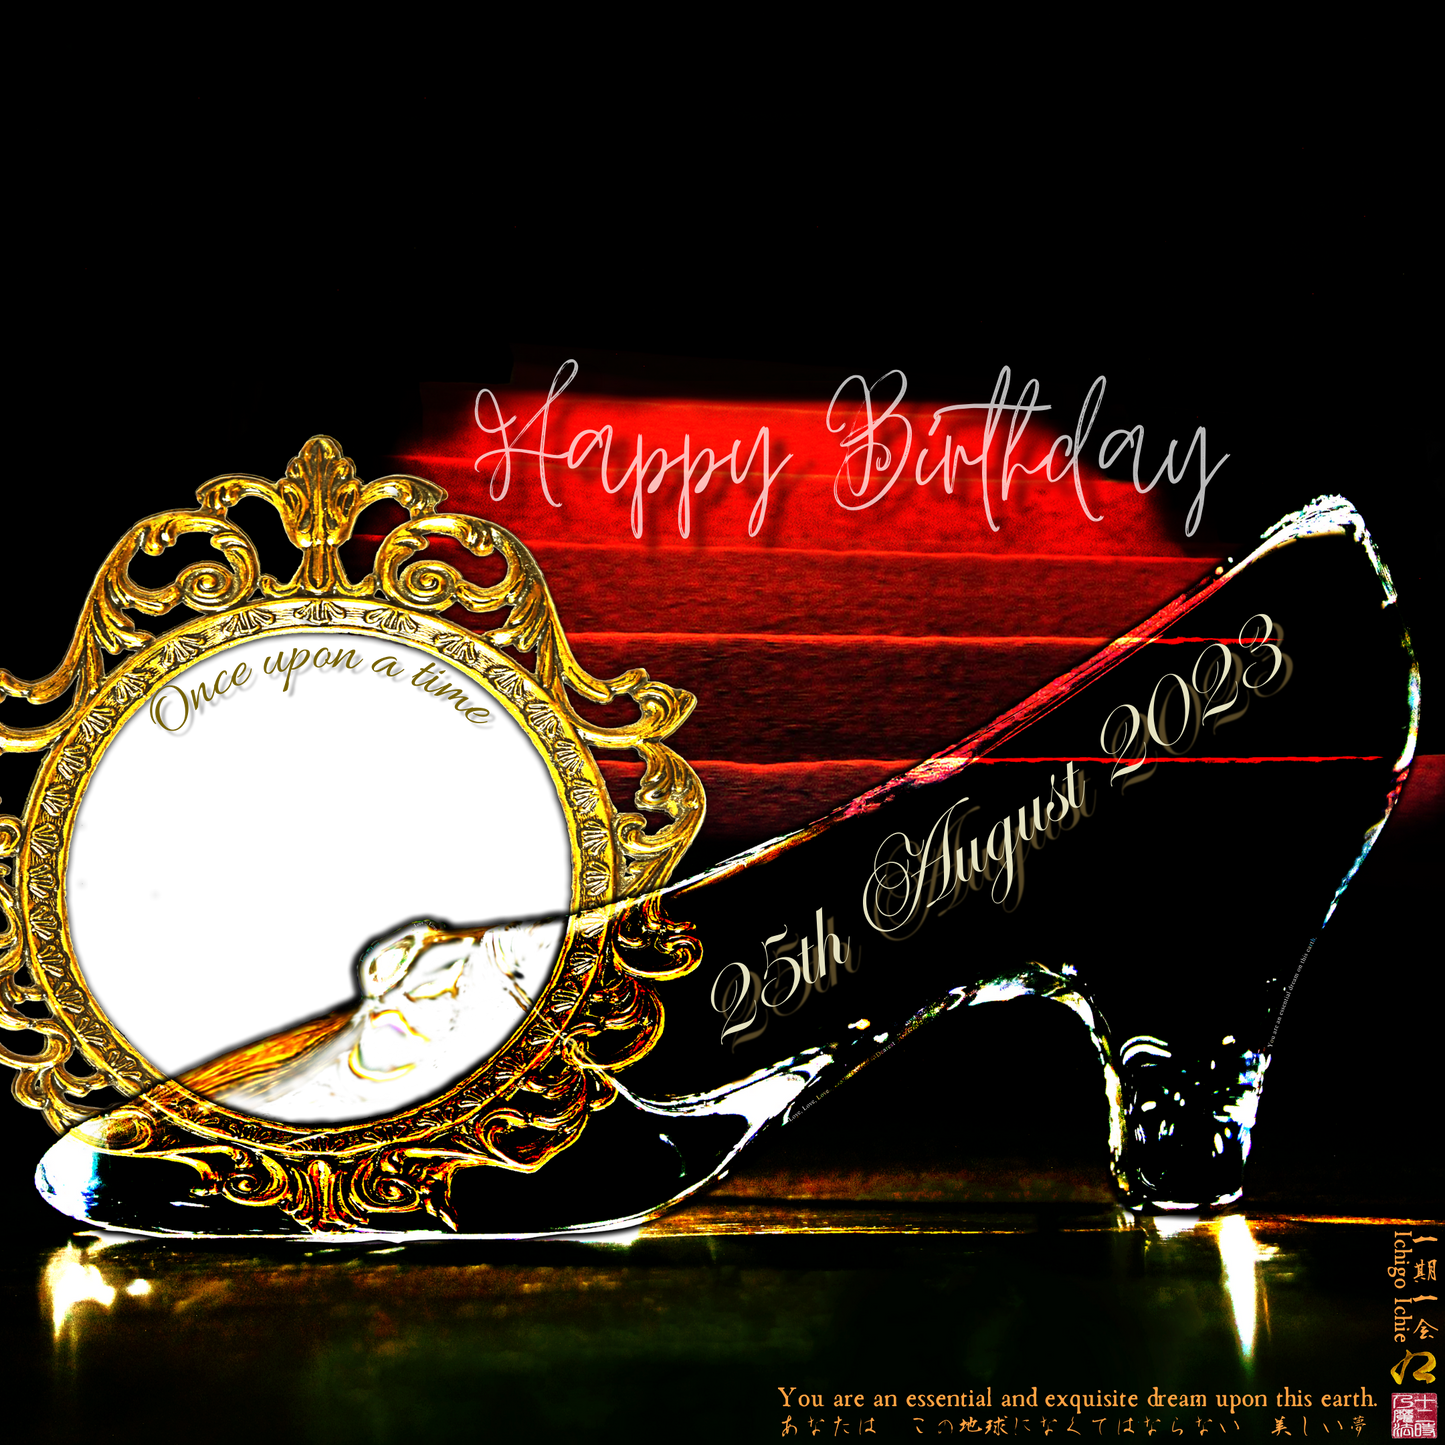 Happy Birthday Glass Slipper "Ichigo Ichie" 25th August 2023 the Left (1-of-1) NFT Art